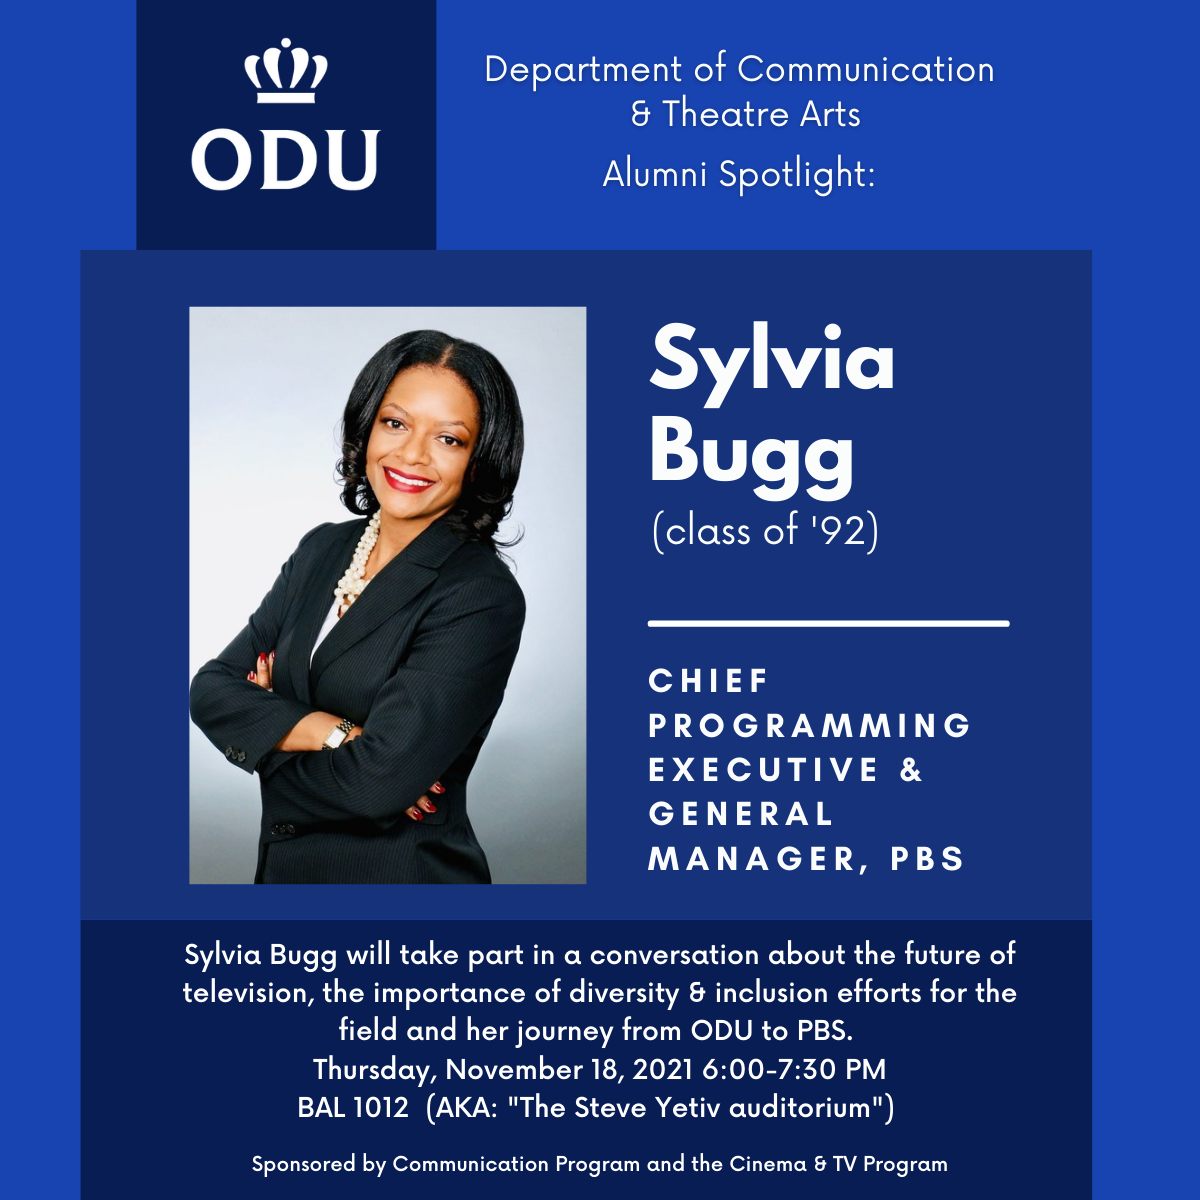 Alumni Spotlight: Sylvia Bugg